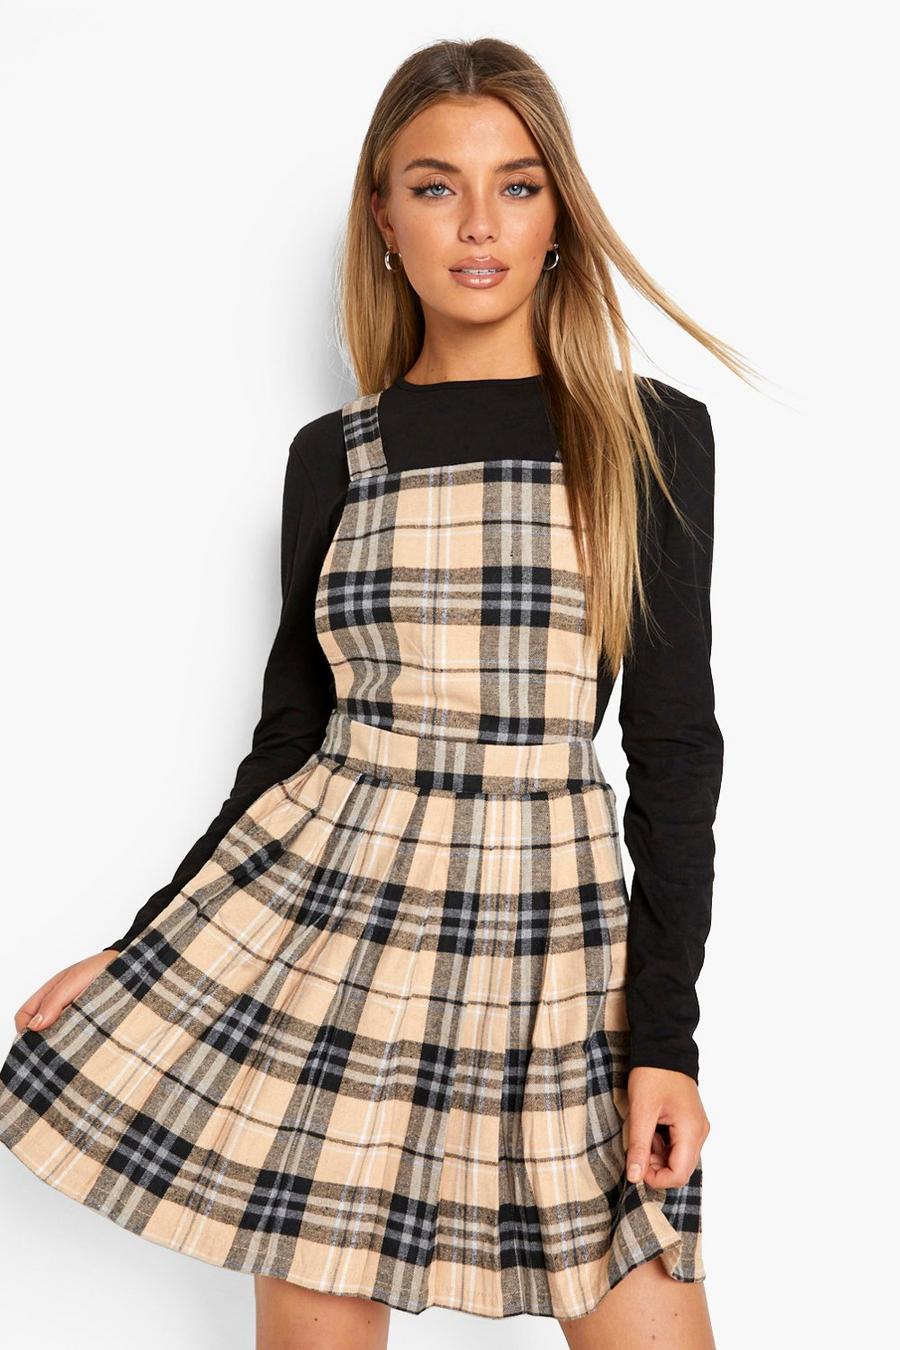 Tan brown Check Print Pleated Skirt Pinafore Dress